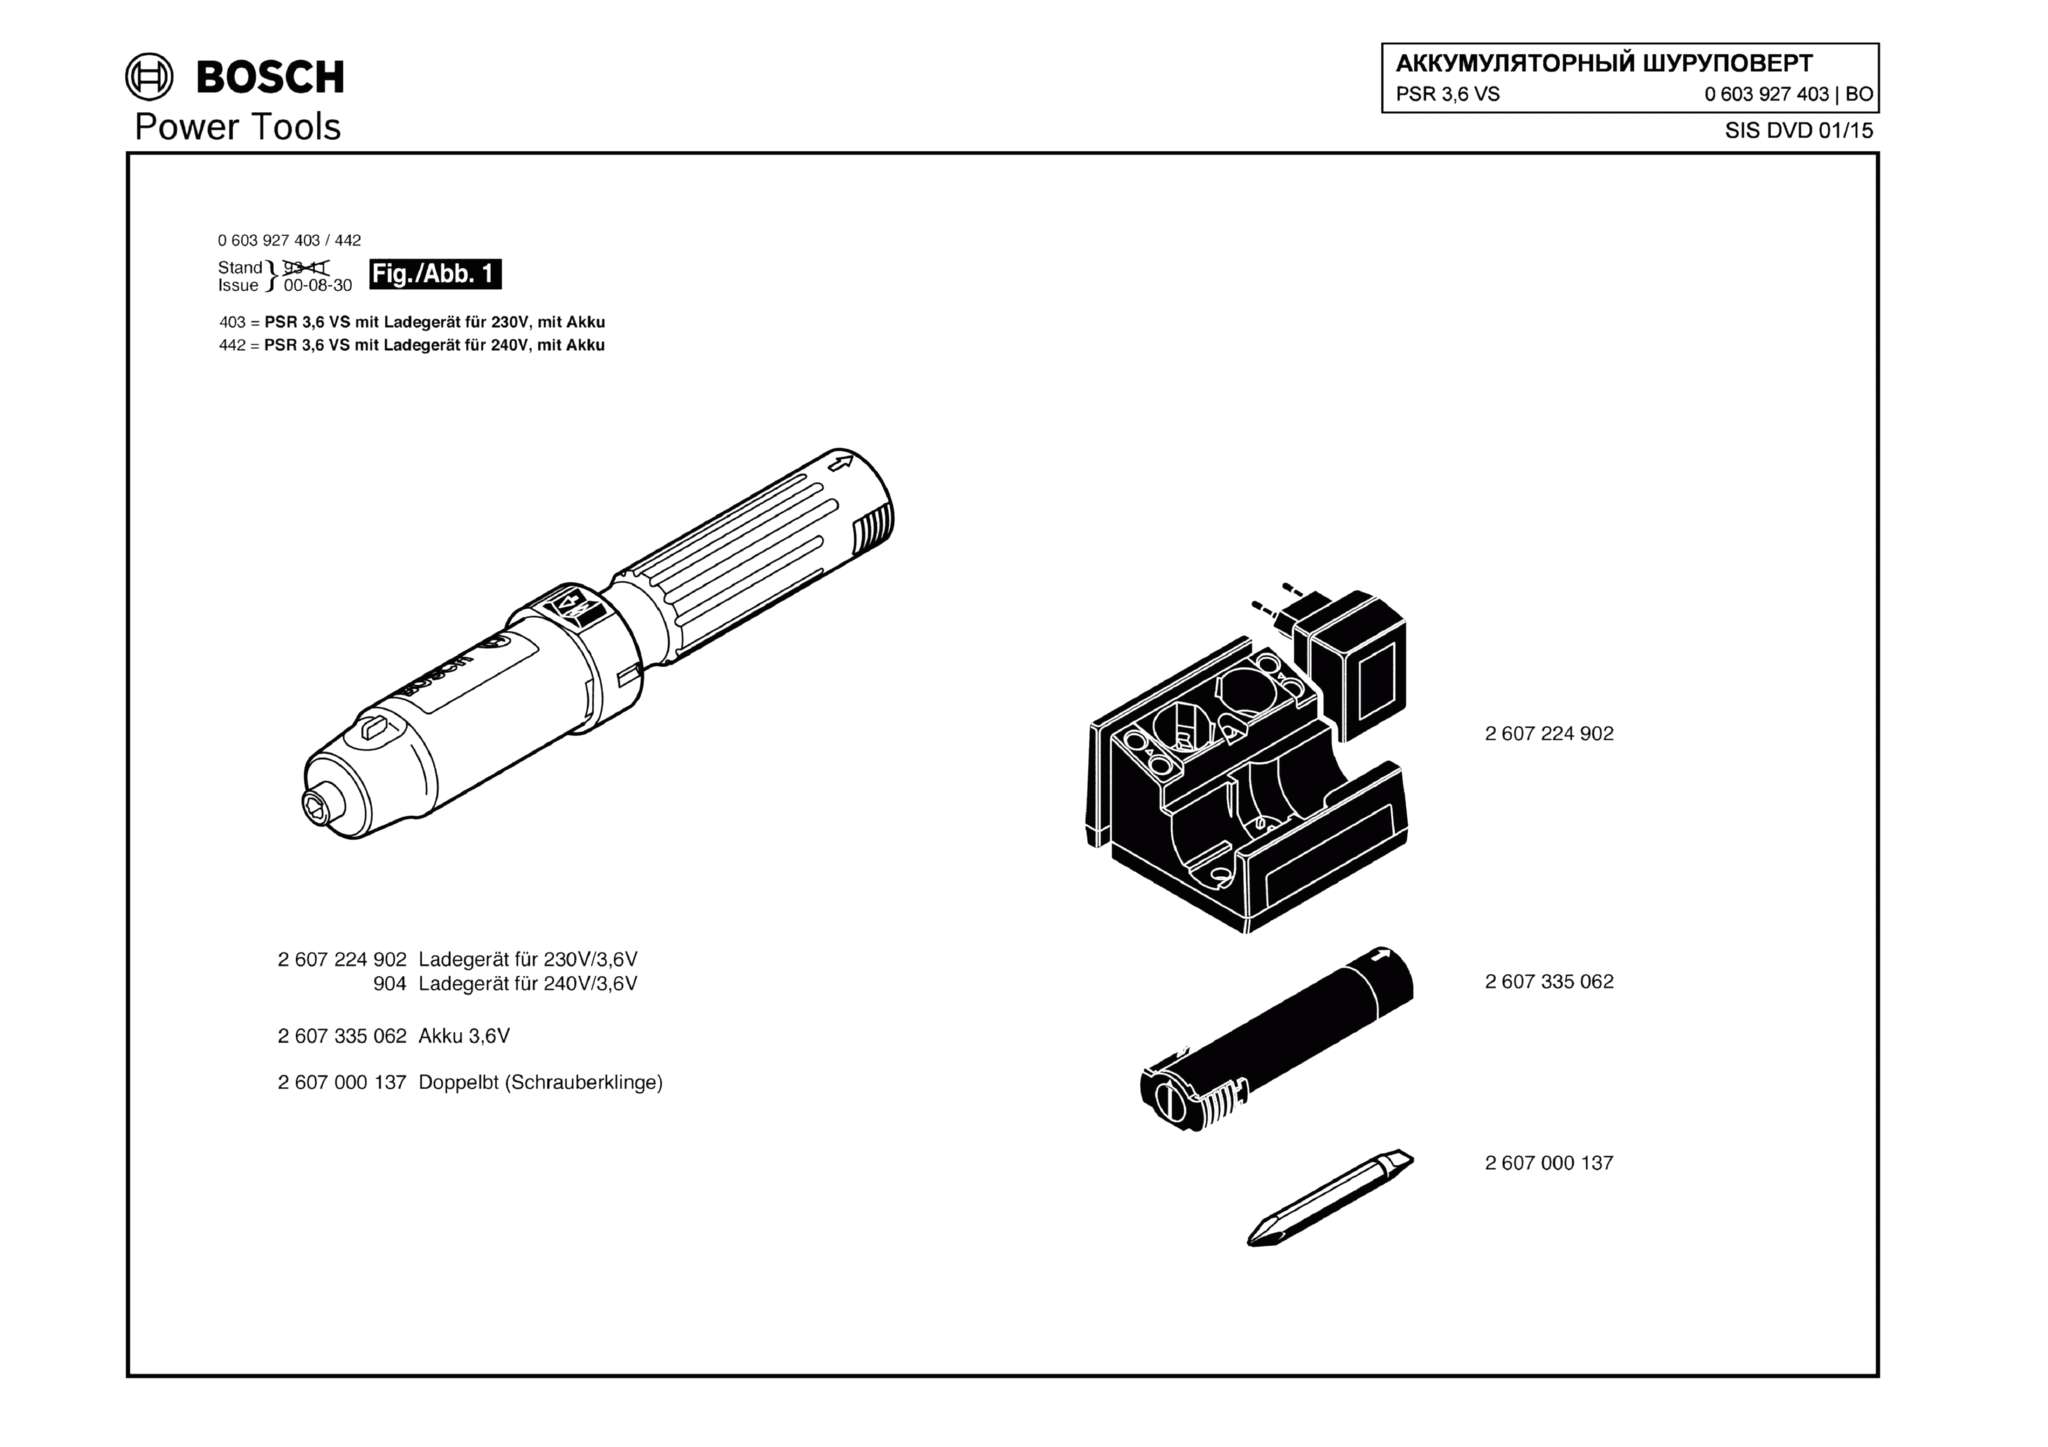 Запчасти, схема и деталировка Bosch PSR 3,6 VS (ТИП 0603927403)